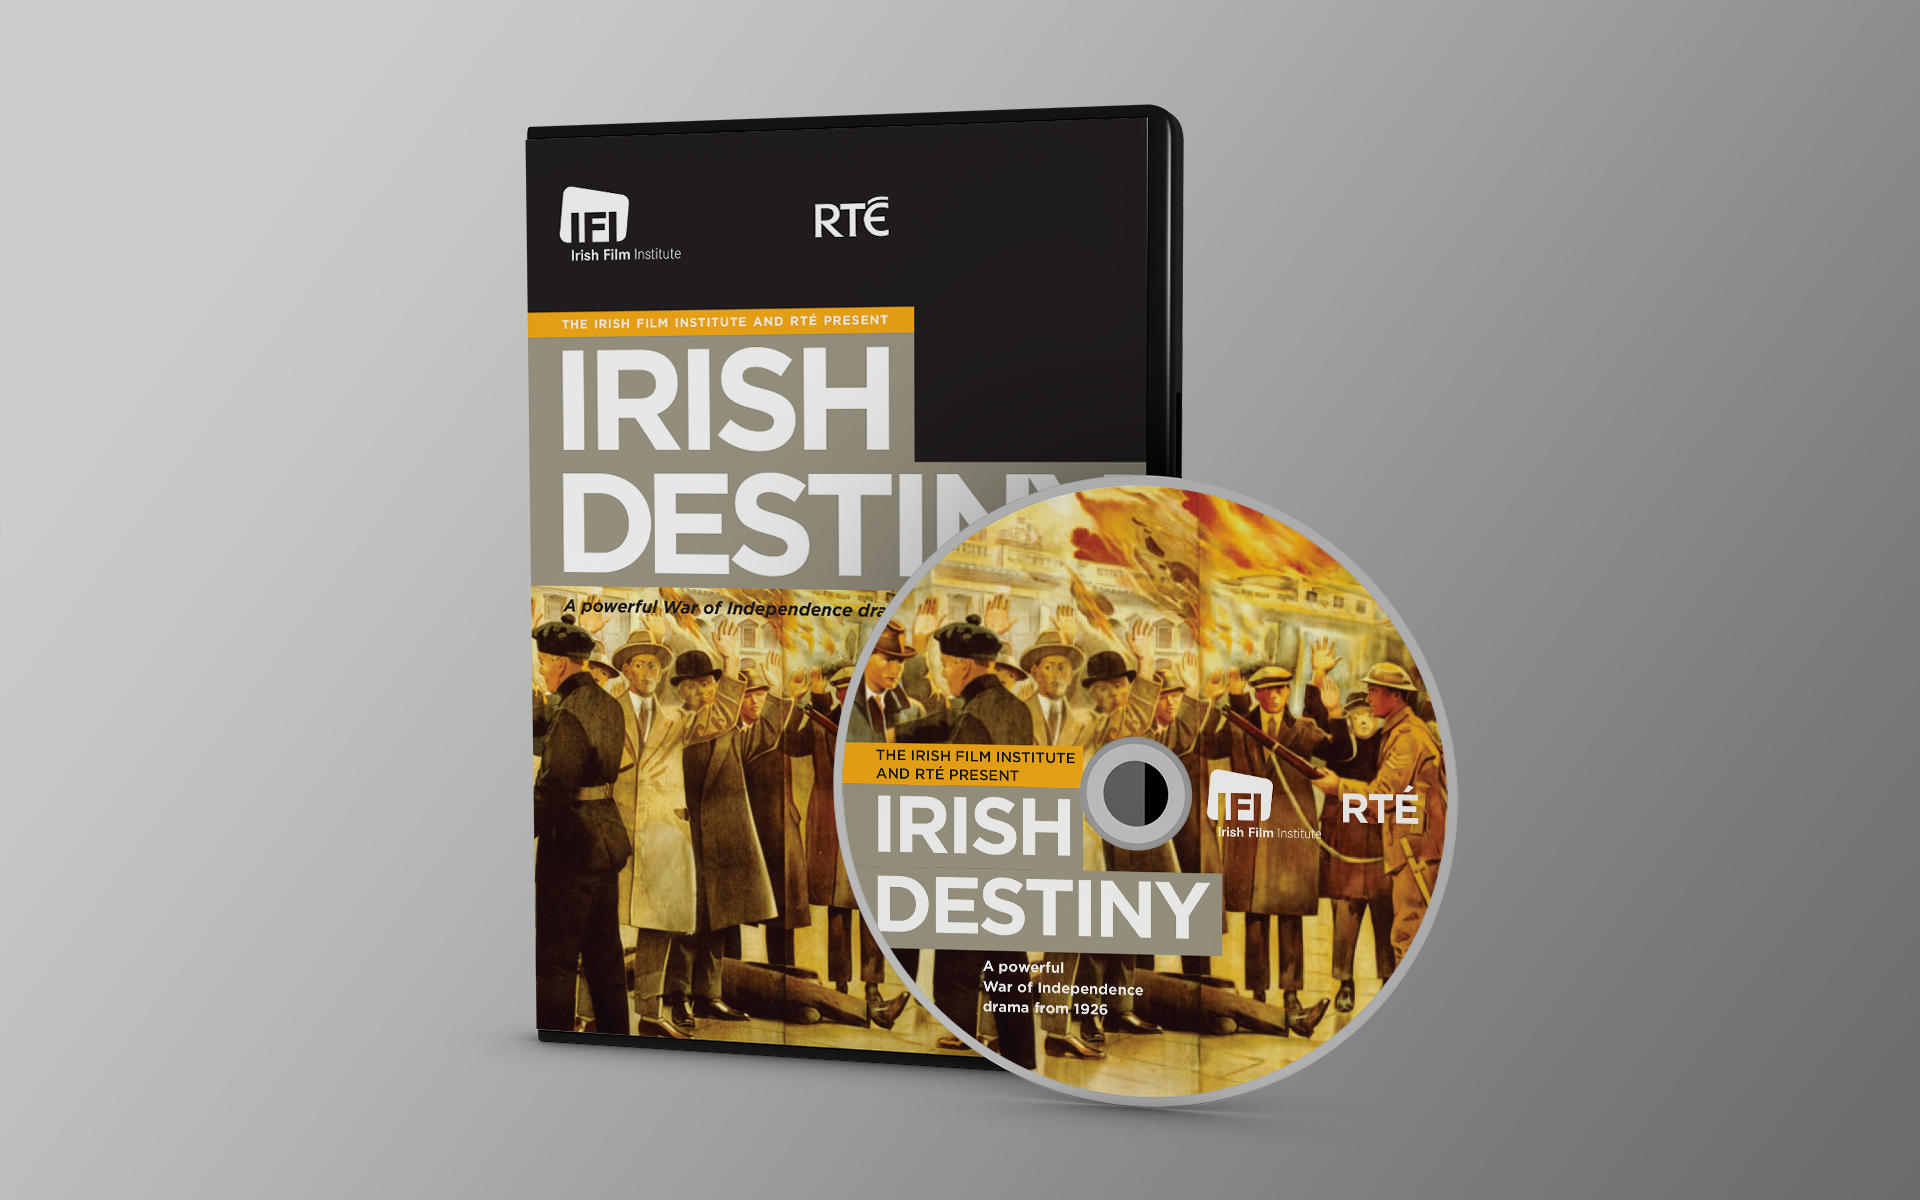 IFI Irish Film Archive Irish Destiny DVD package design